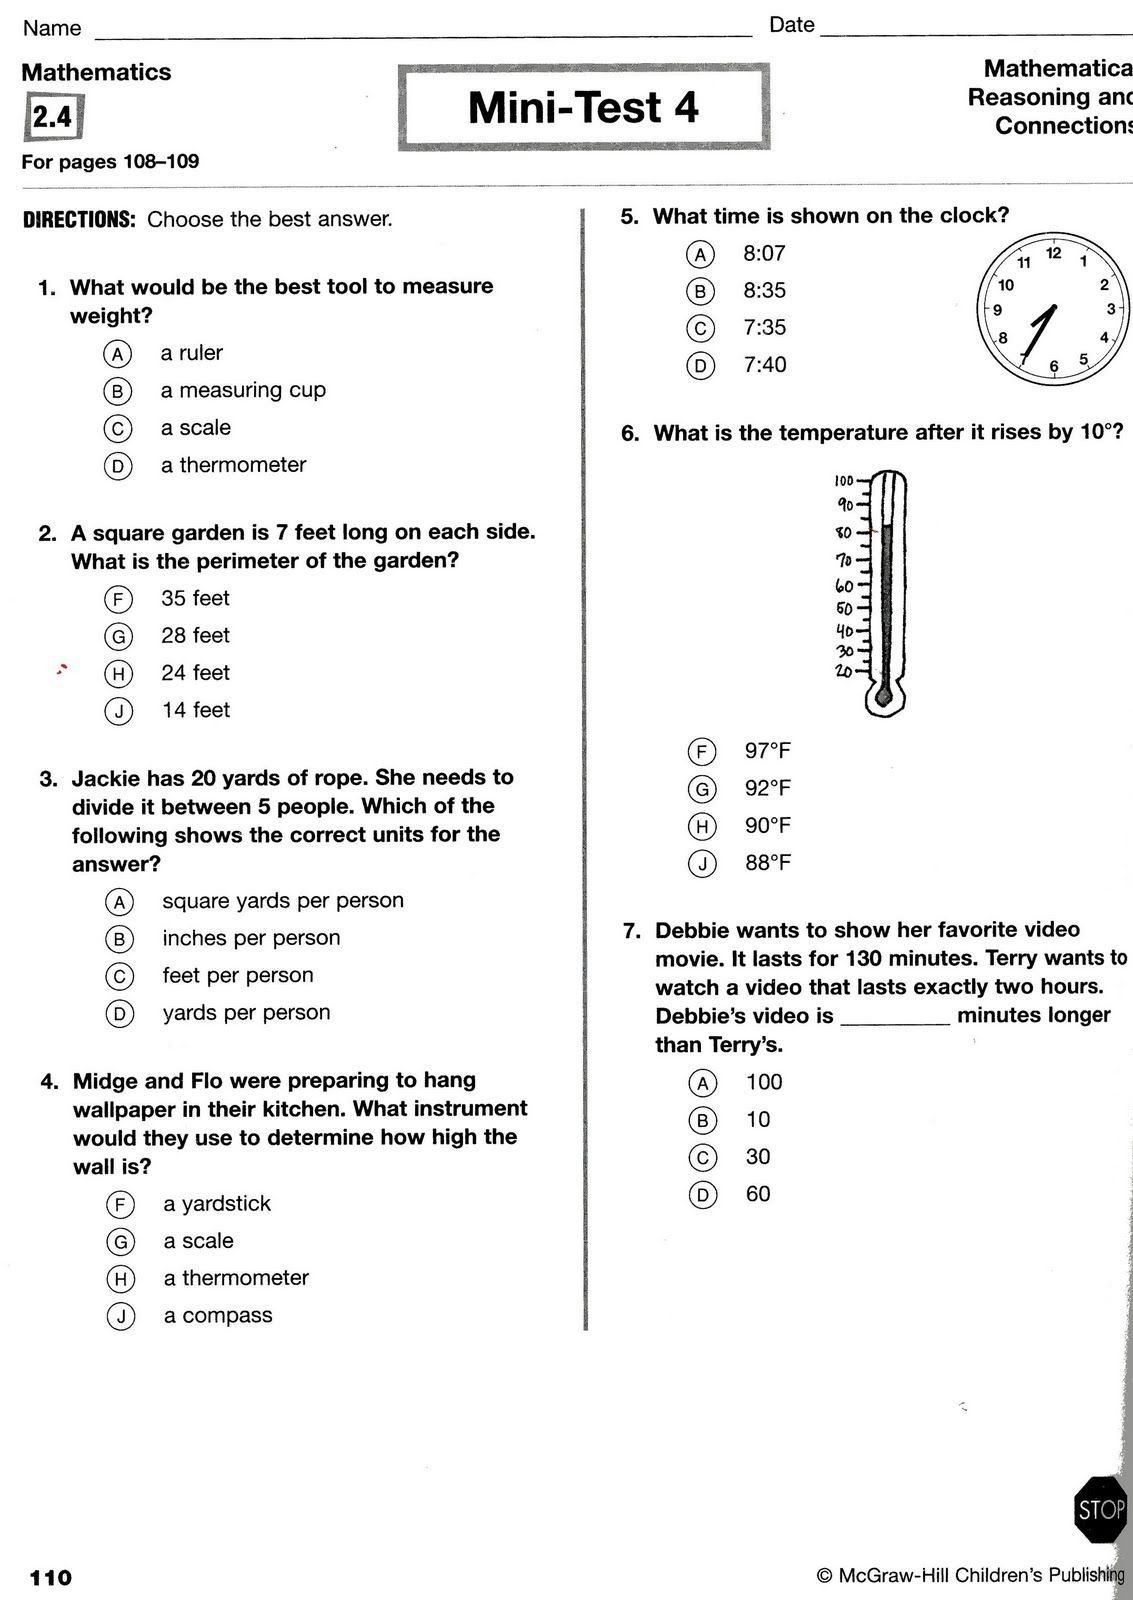 Free 1St Grade Assessment Tests | Closet Of Free Samples | Get Free - Free Printable Informal Math Assessments